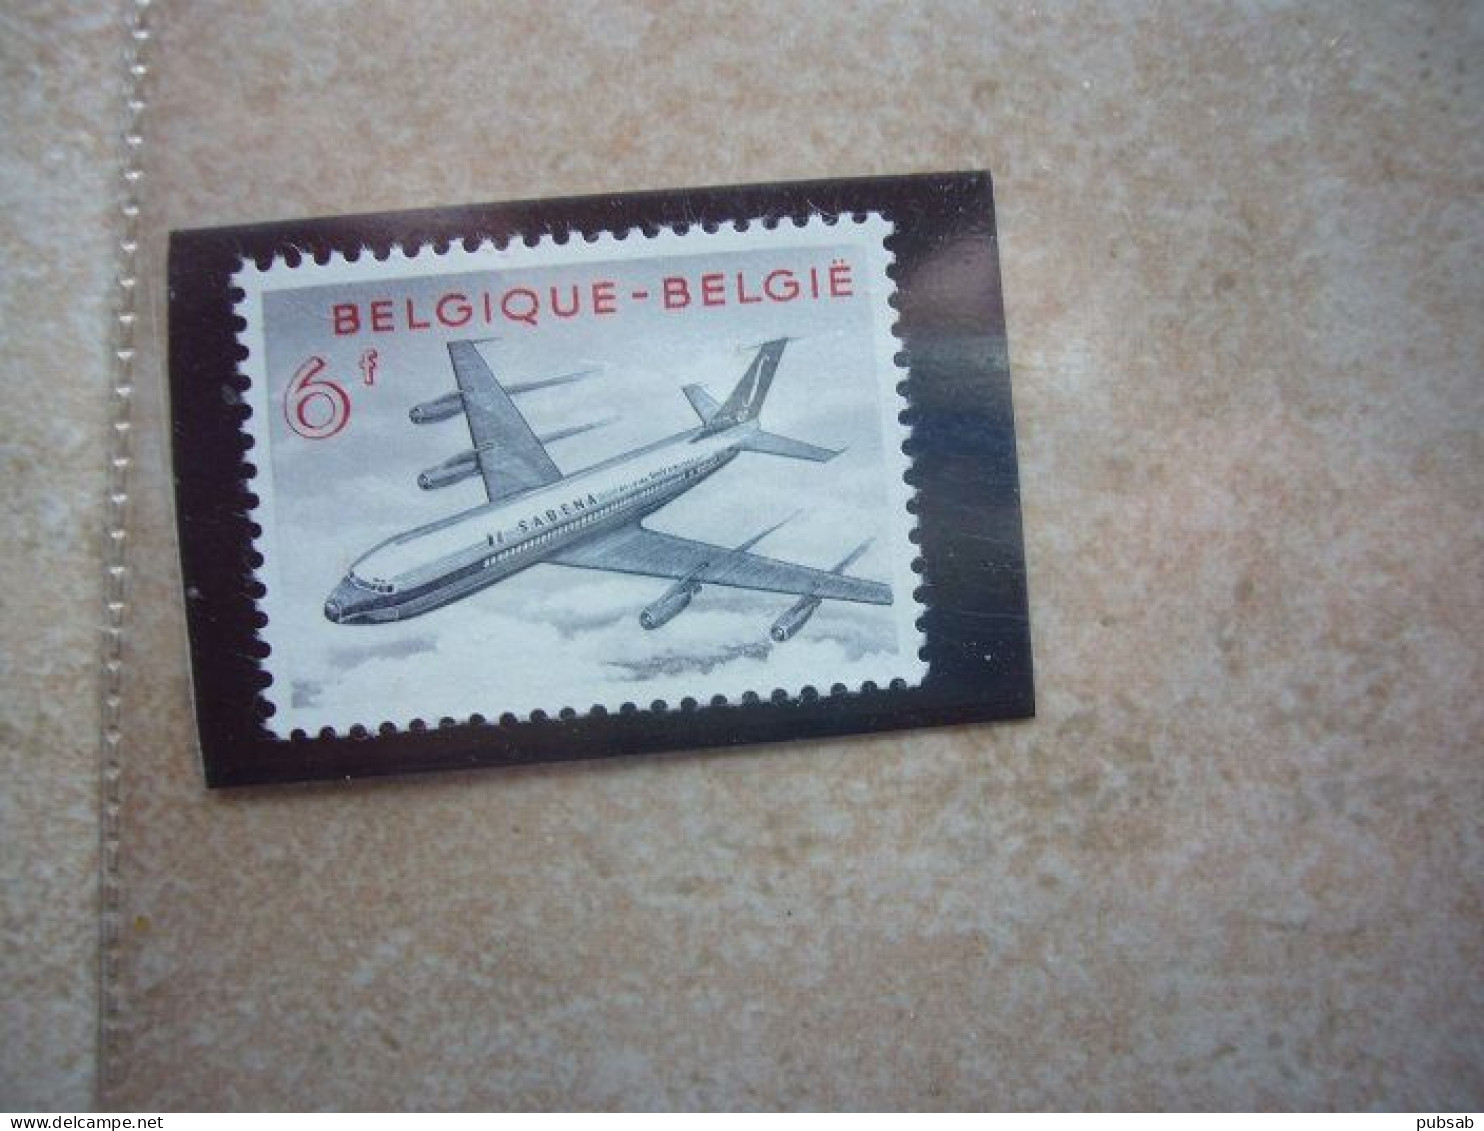 Avion / Airplane / SABENA / Boeing 707 - Nuevos